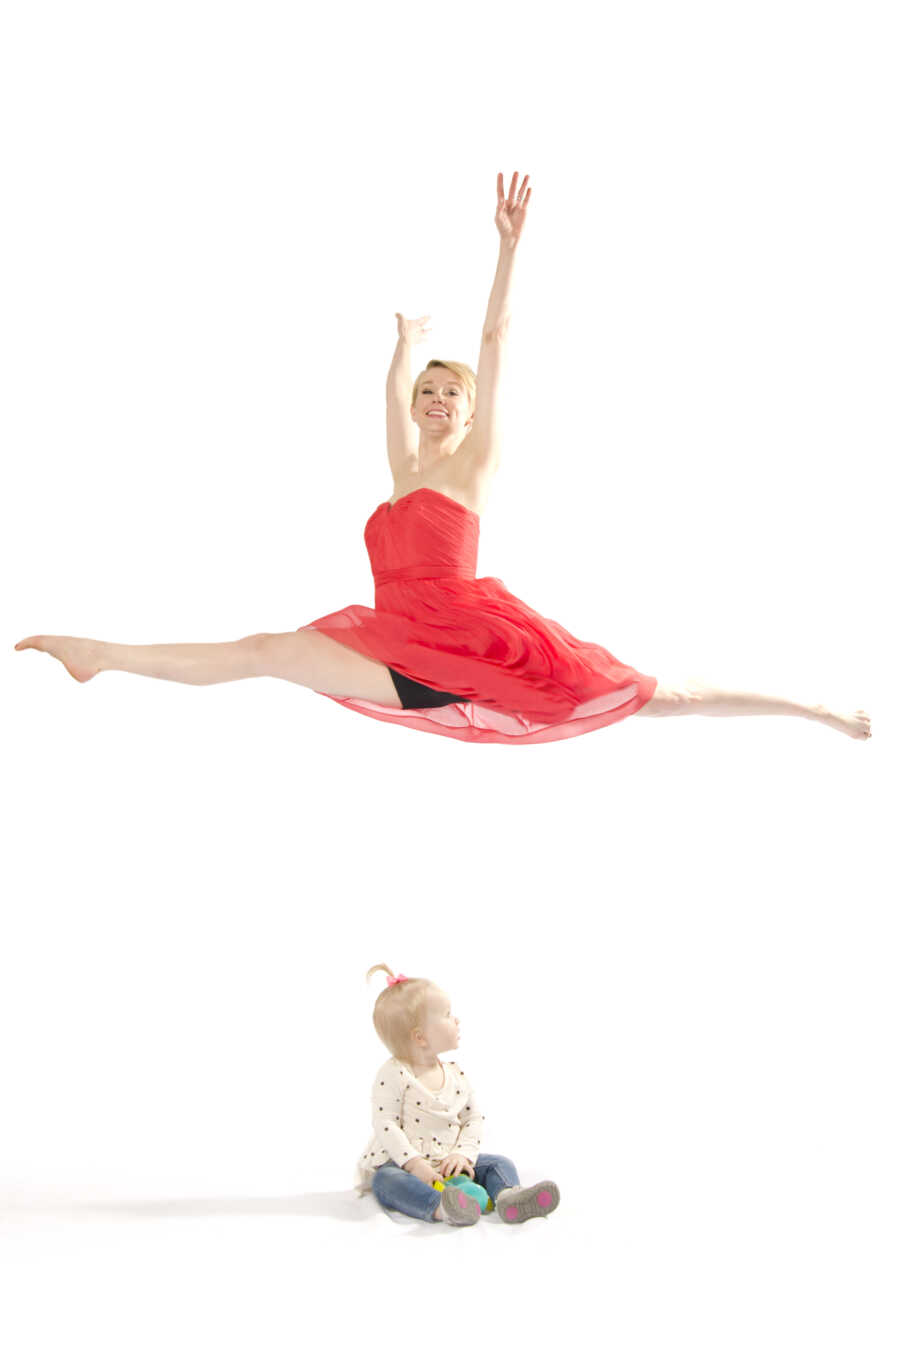 Former dancer does ballet jump over her daughter in photoshoot